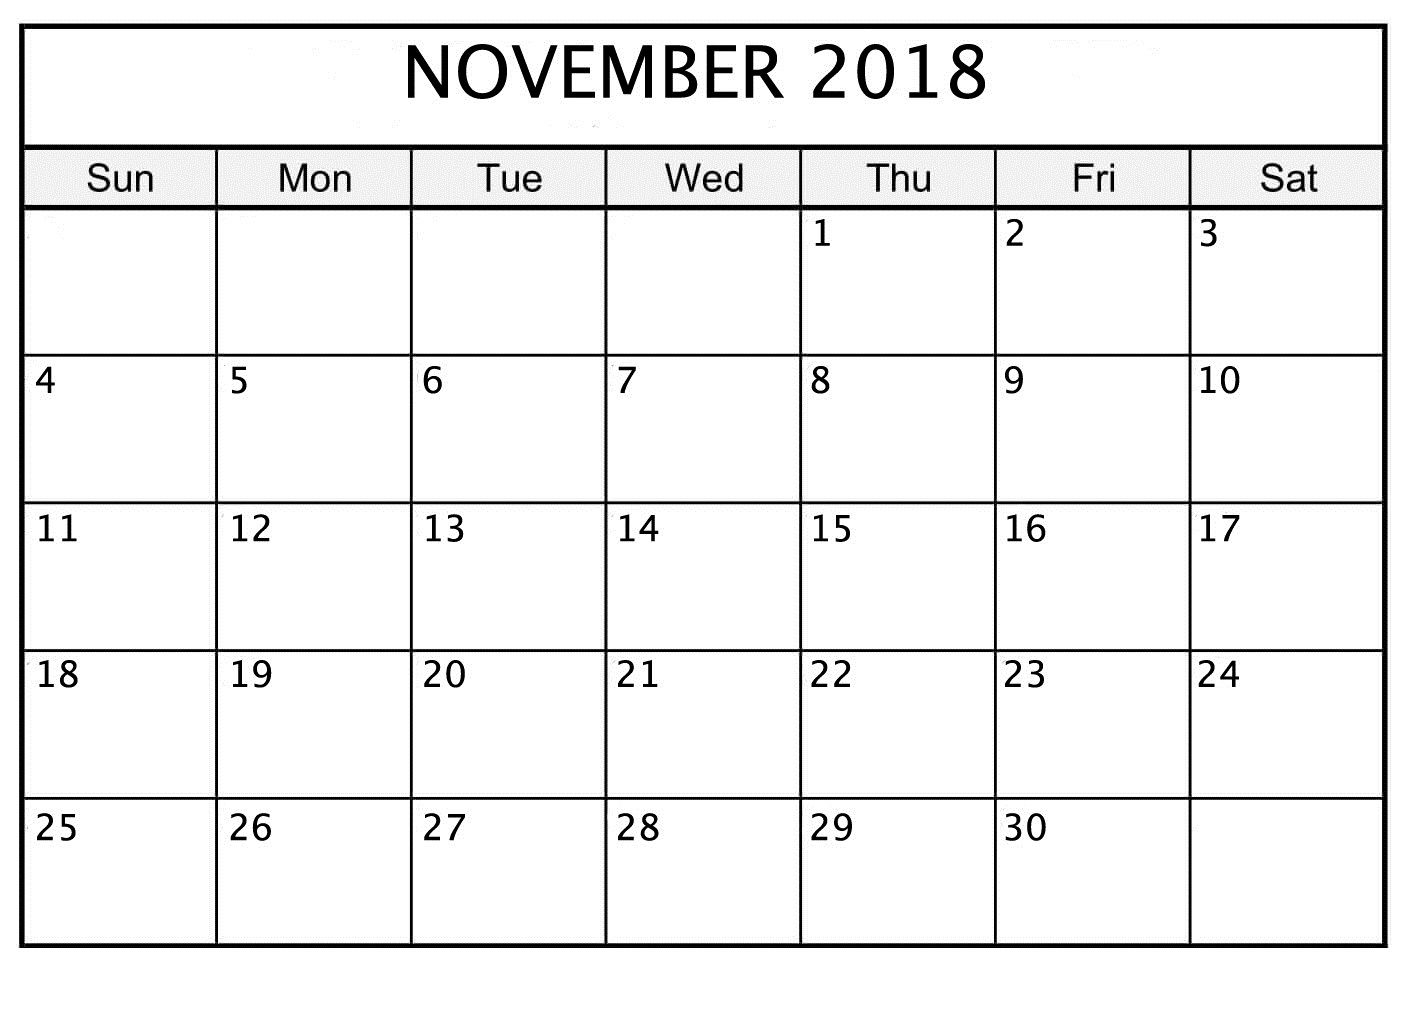 November 2018 Printable Calendar Date And Time | November